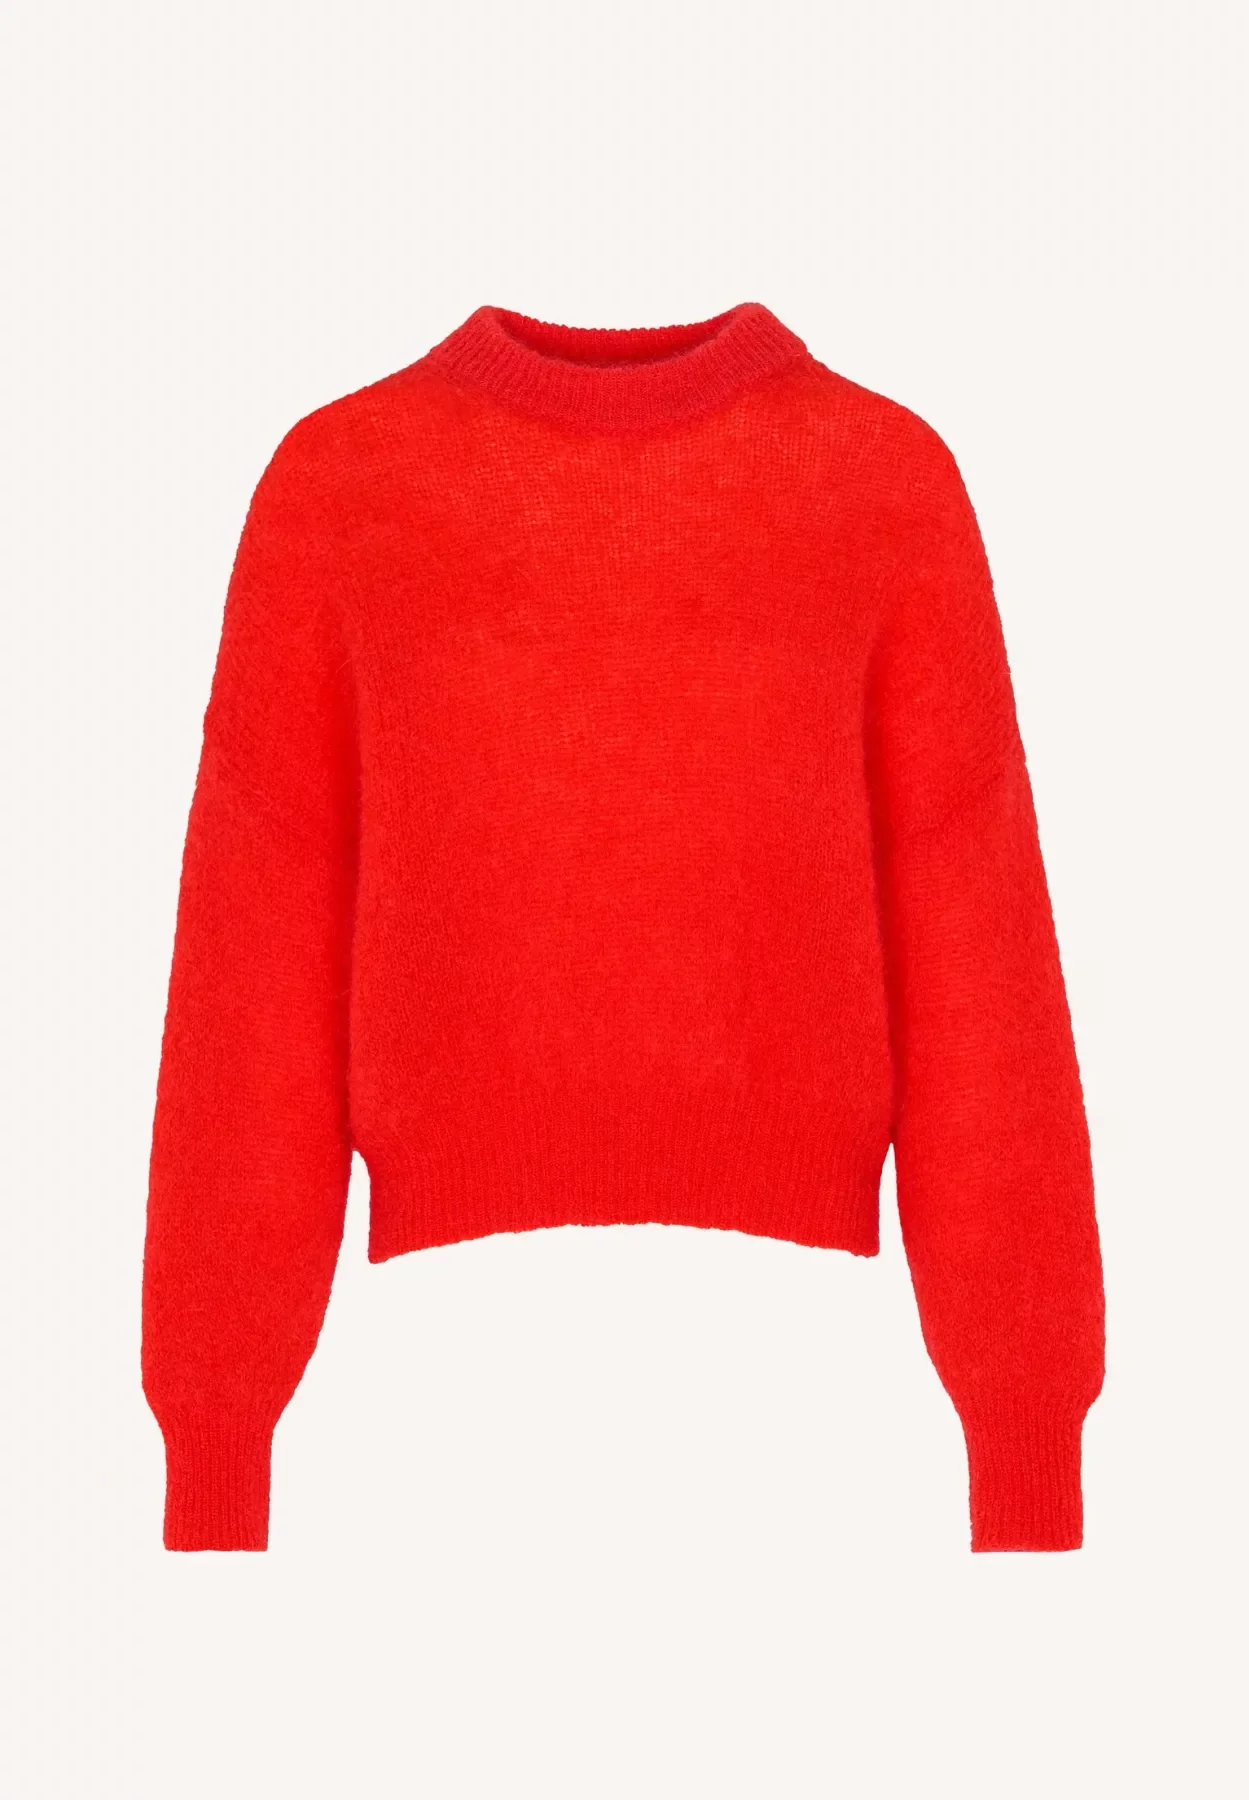 by-bar amsterdam - sonny pullover - poppy red 5